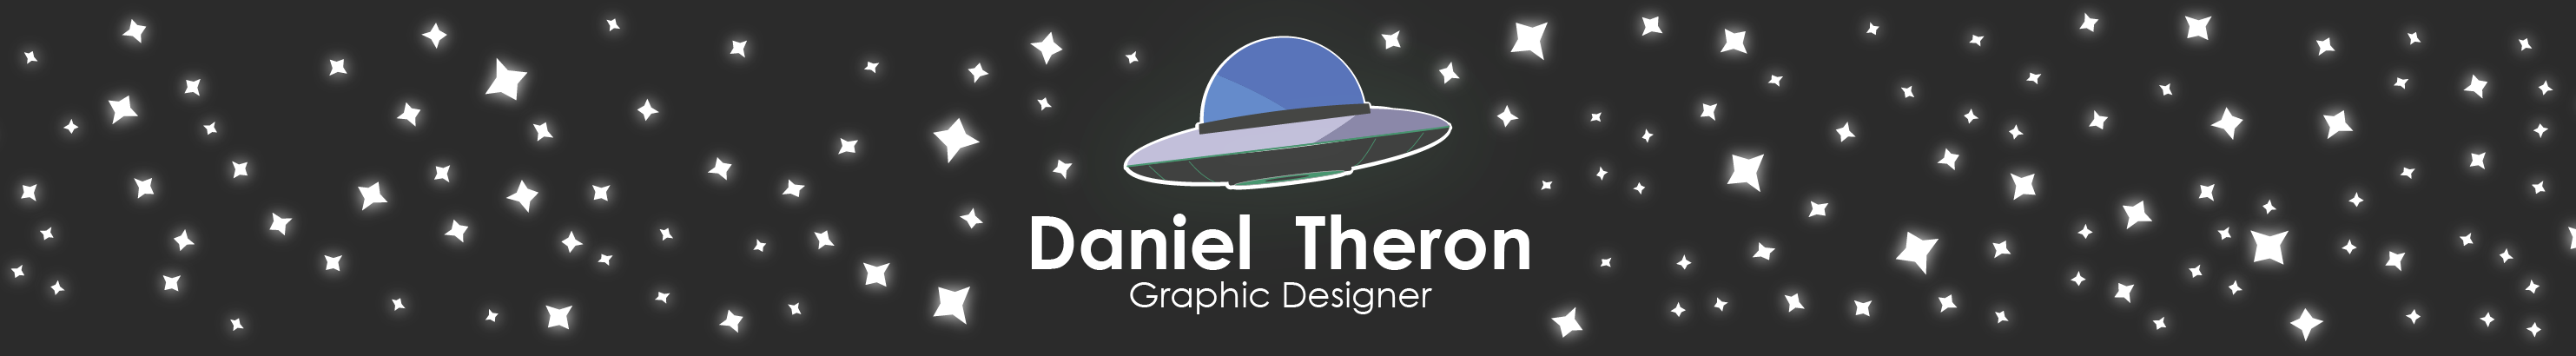 Daniel Theron's profile banner